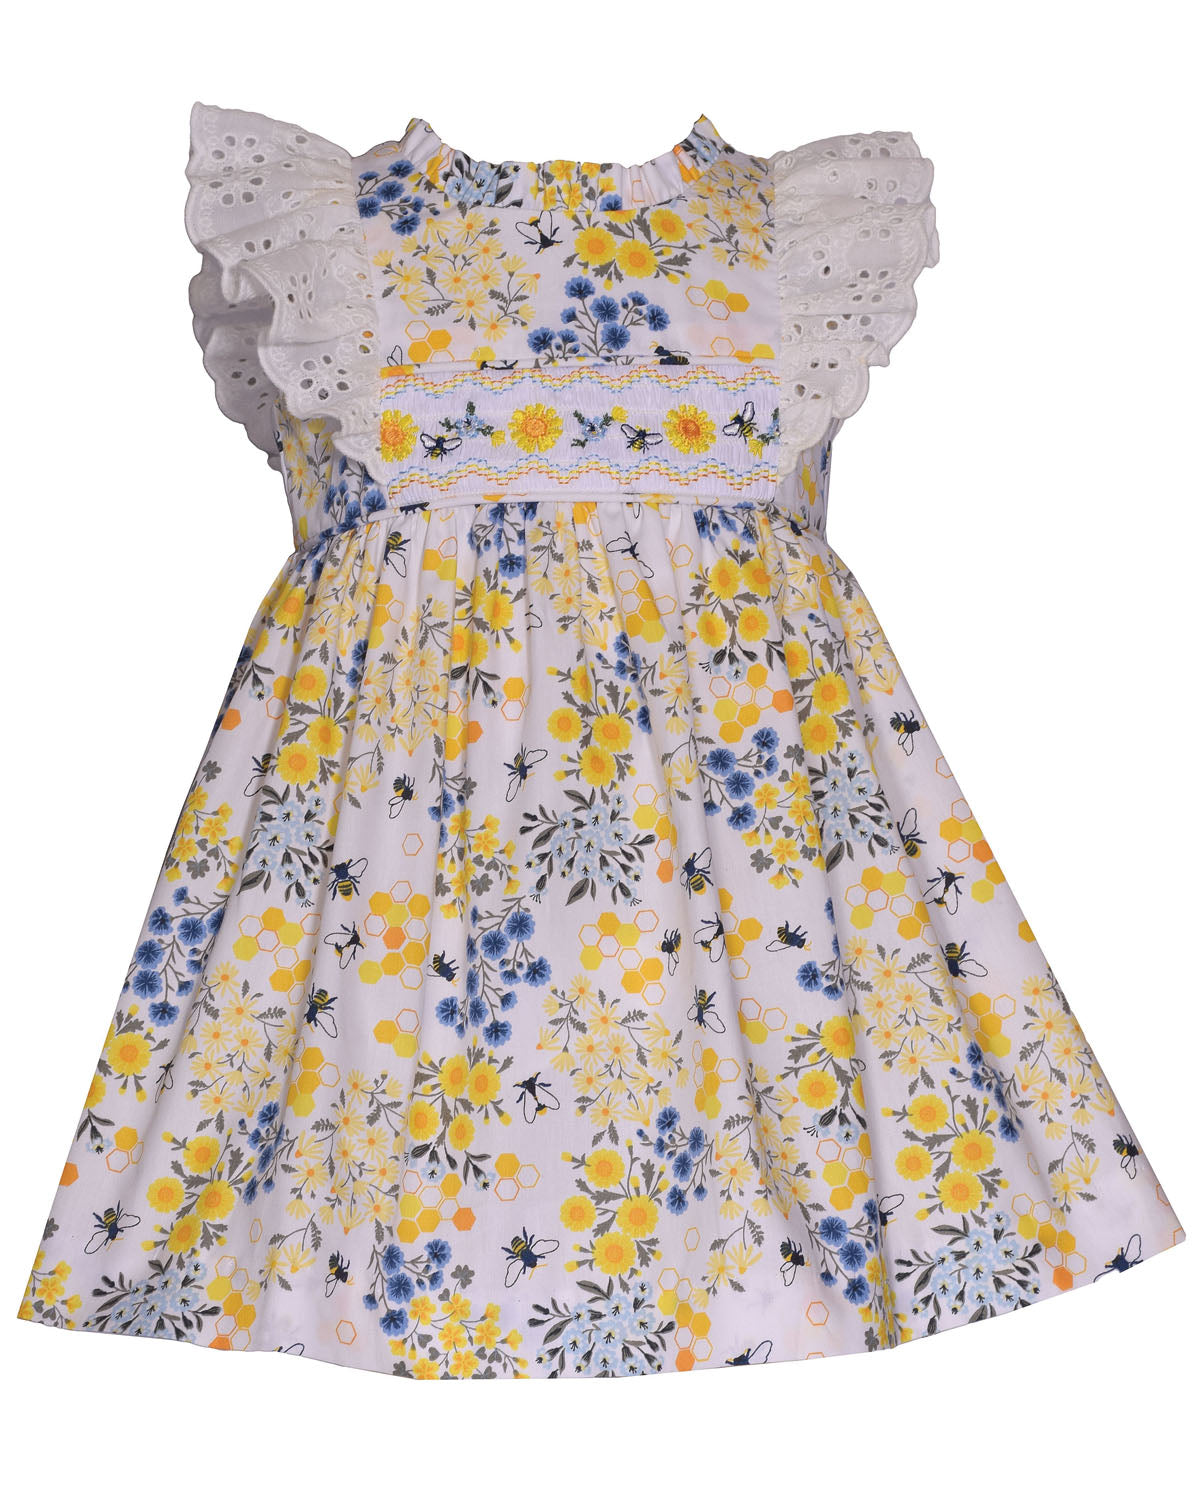 Bonnie Jean 4-6X Bumblebee Floral Smock Dress